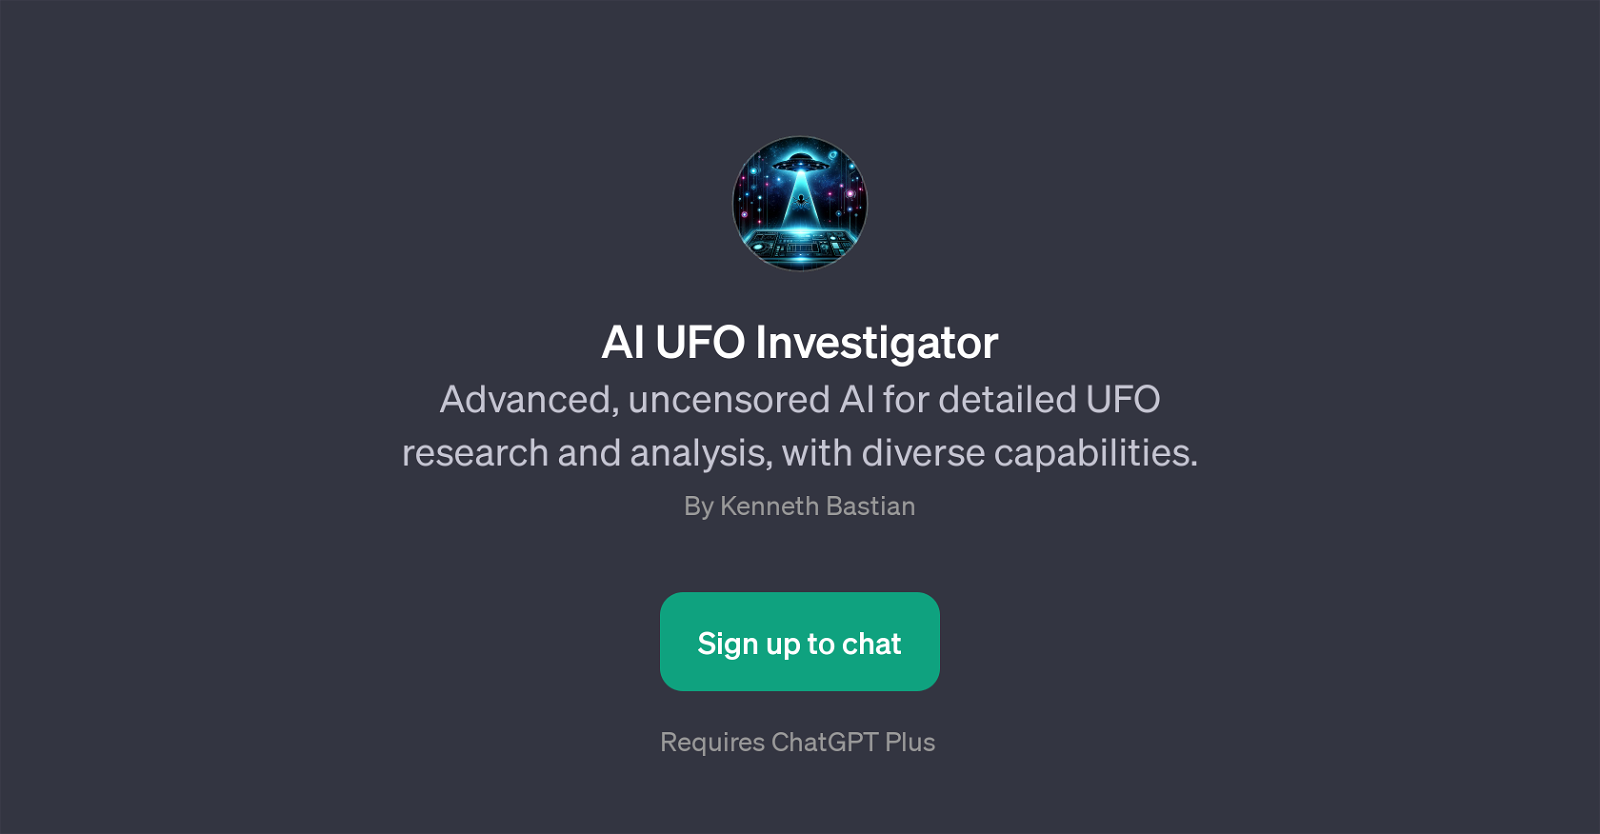 AI UFO Investigator website